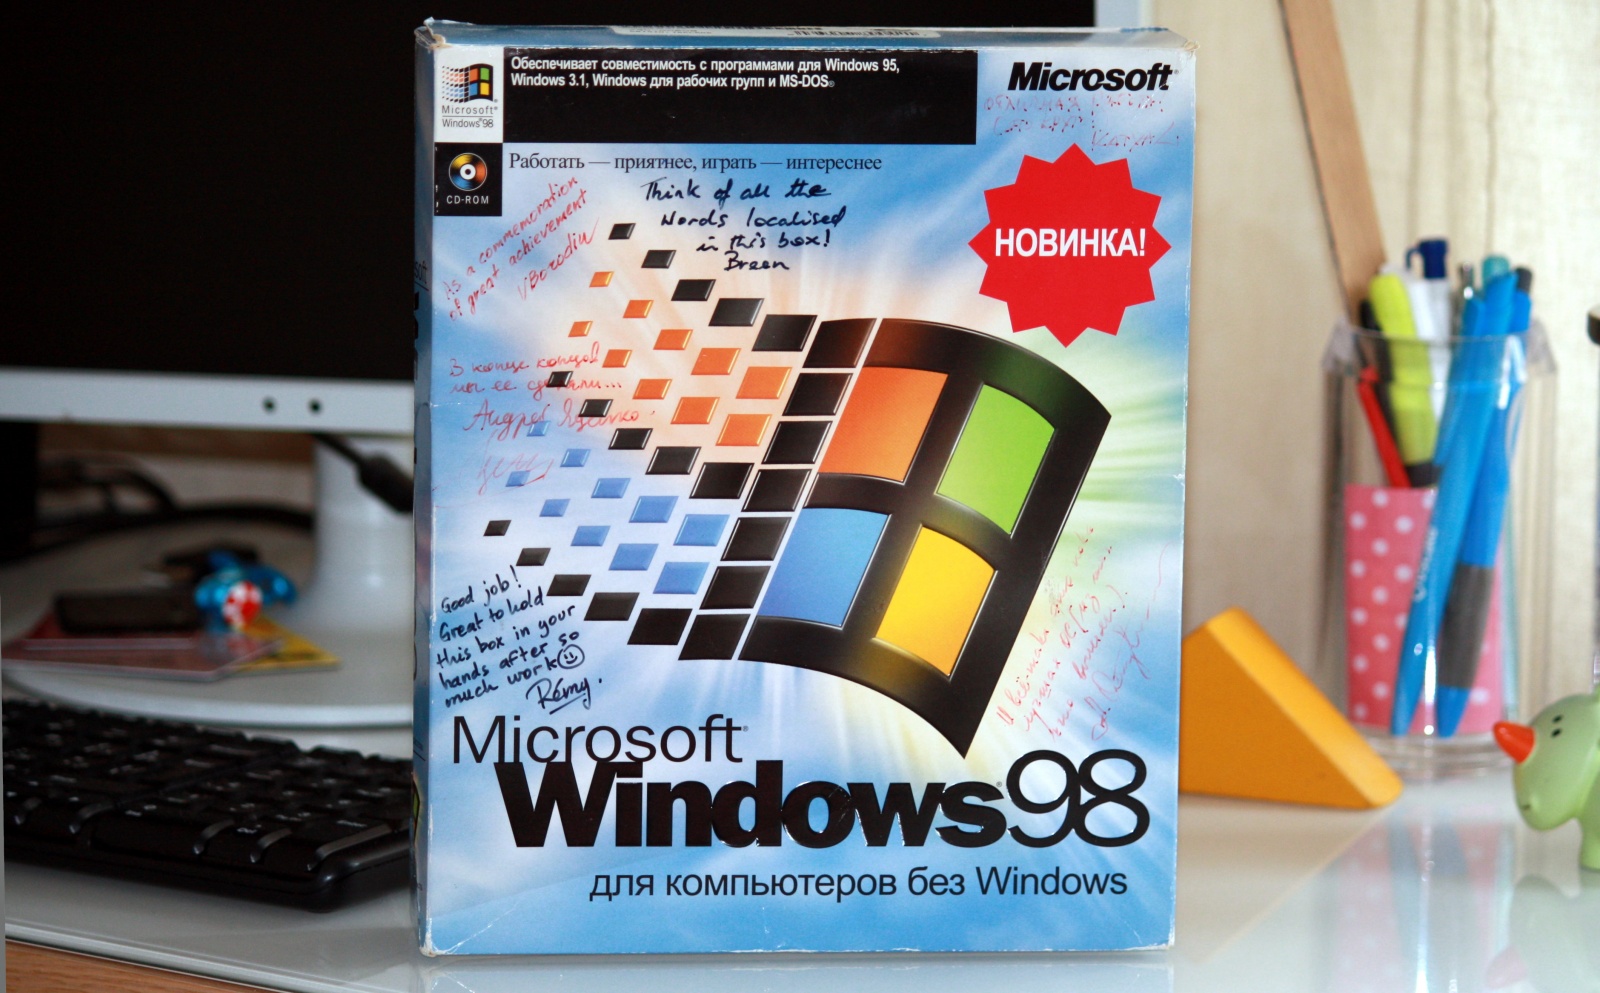 Windows 98 RU signed by Microsoft WPGI colleagues